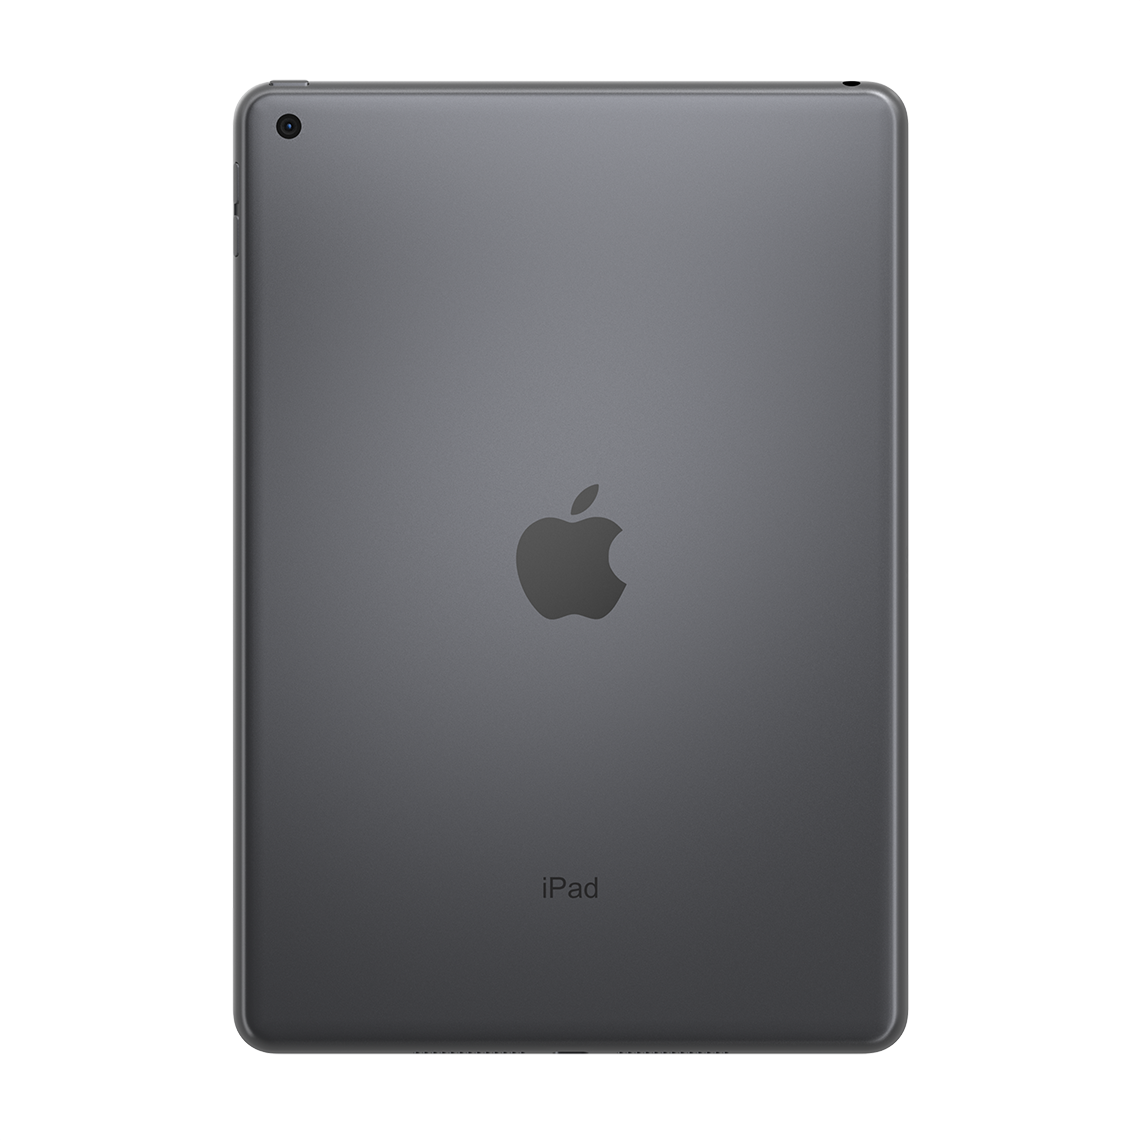 Apple iPad 10.2-inch 9th Generation - Space Gray - 256GB, Wi-Fi + Cellular, Open Box